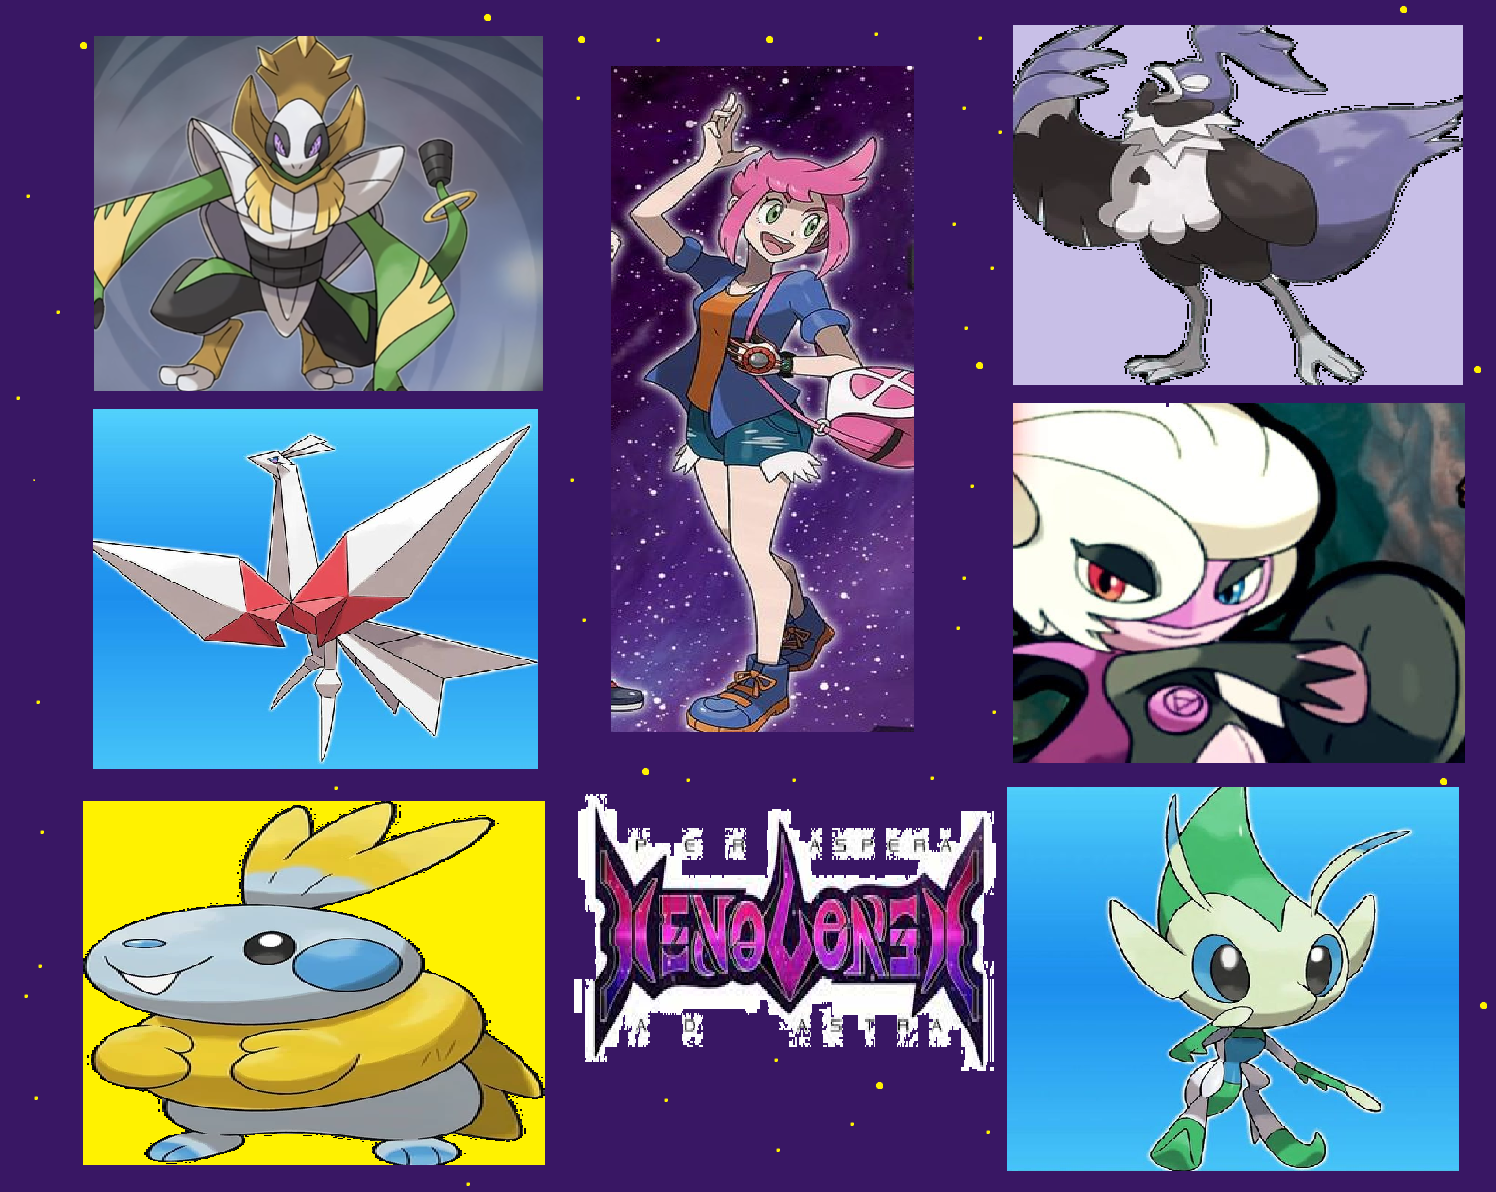 My Pokemon Xenoverse Team by PaperEmonga on DeviantArt